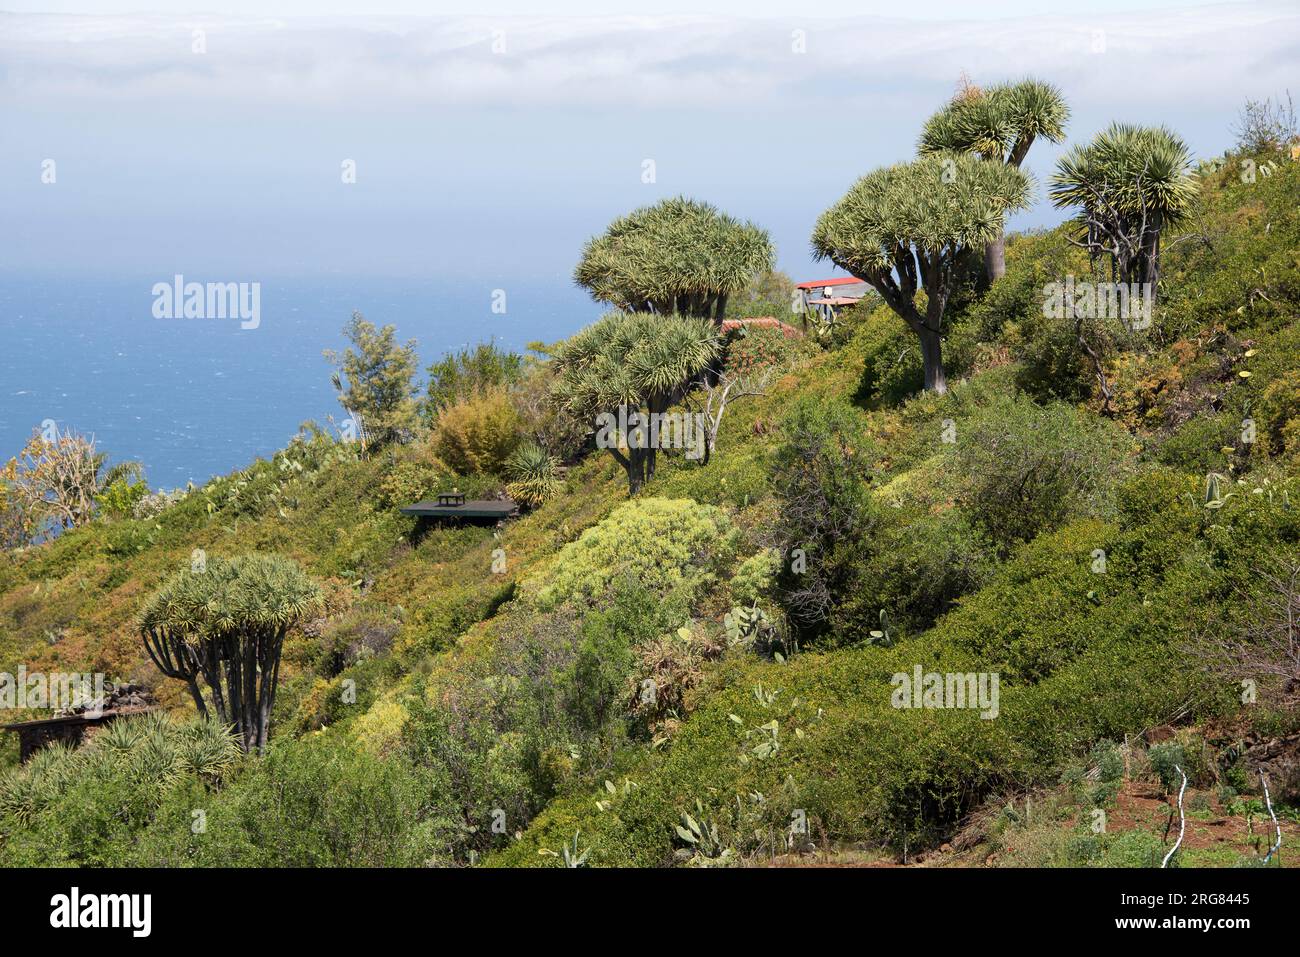 Drago or Canary Islands dragon tree (Dracaena draco) is a tree-like plant native of Macaronesia Region. This photo was taken in Las Tricias, Garafía, Stock Photo